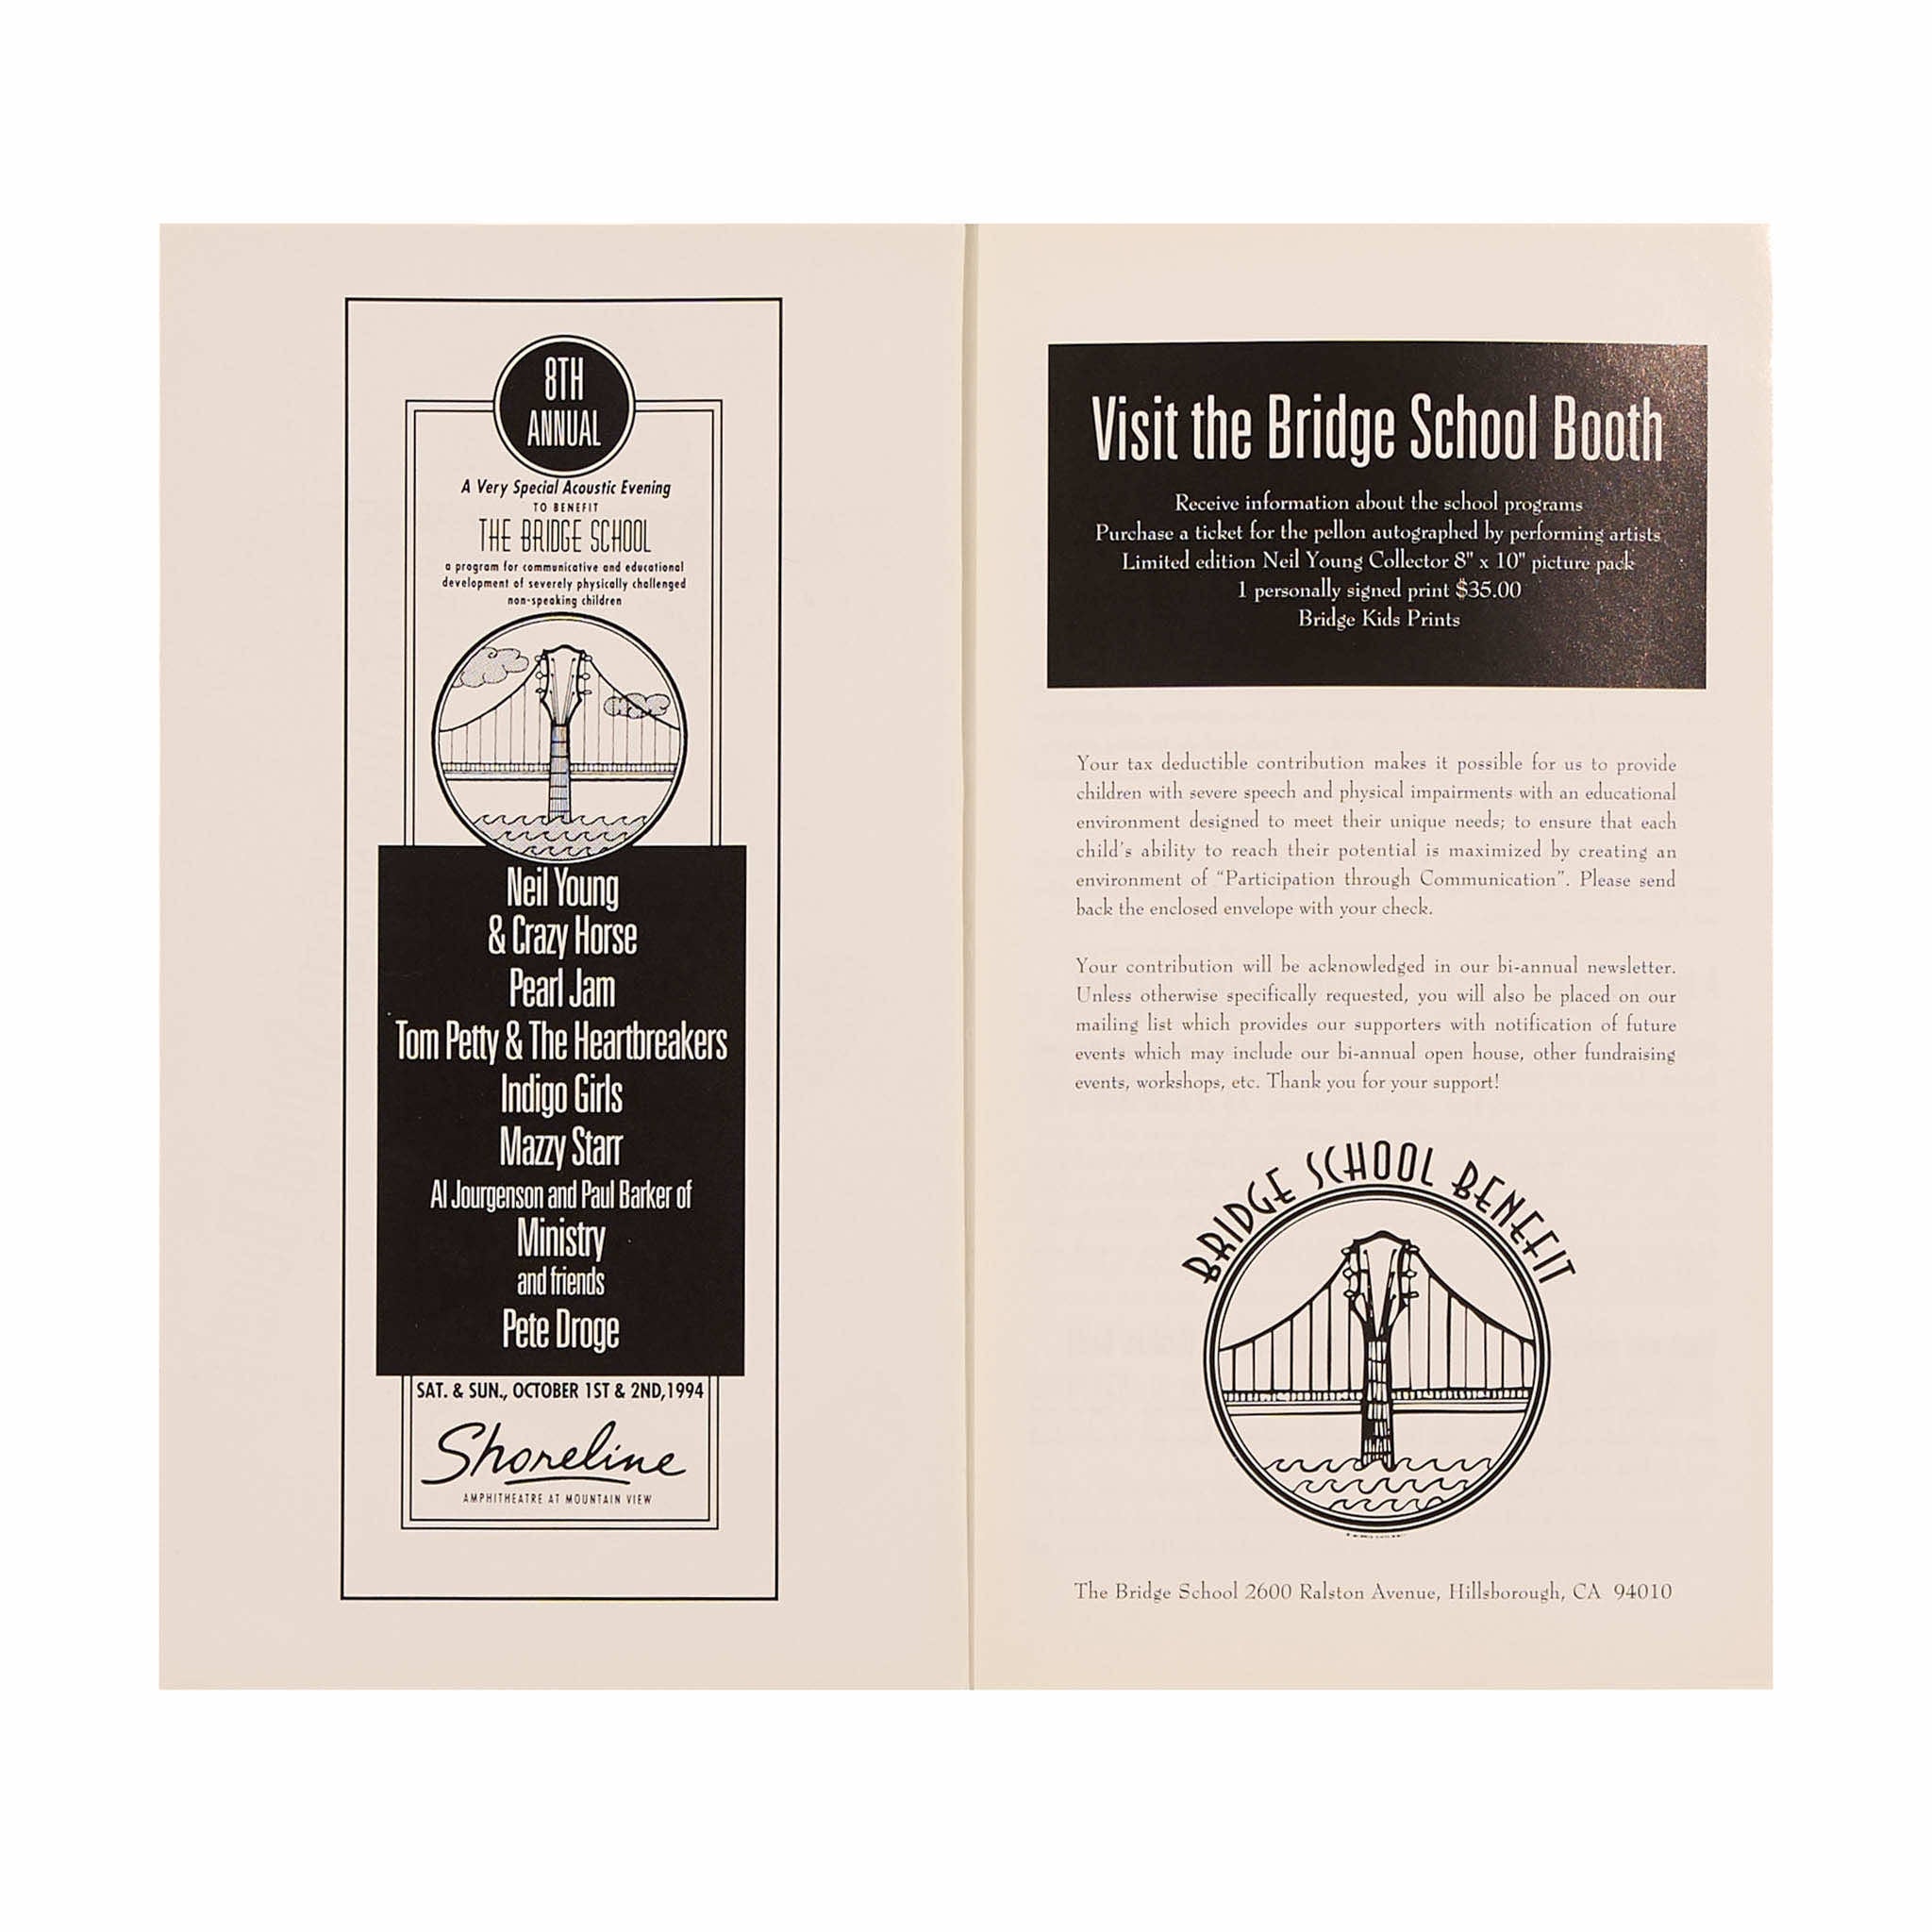 1994 - 8th Annual Bridge School Benefit concert program